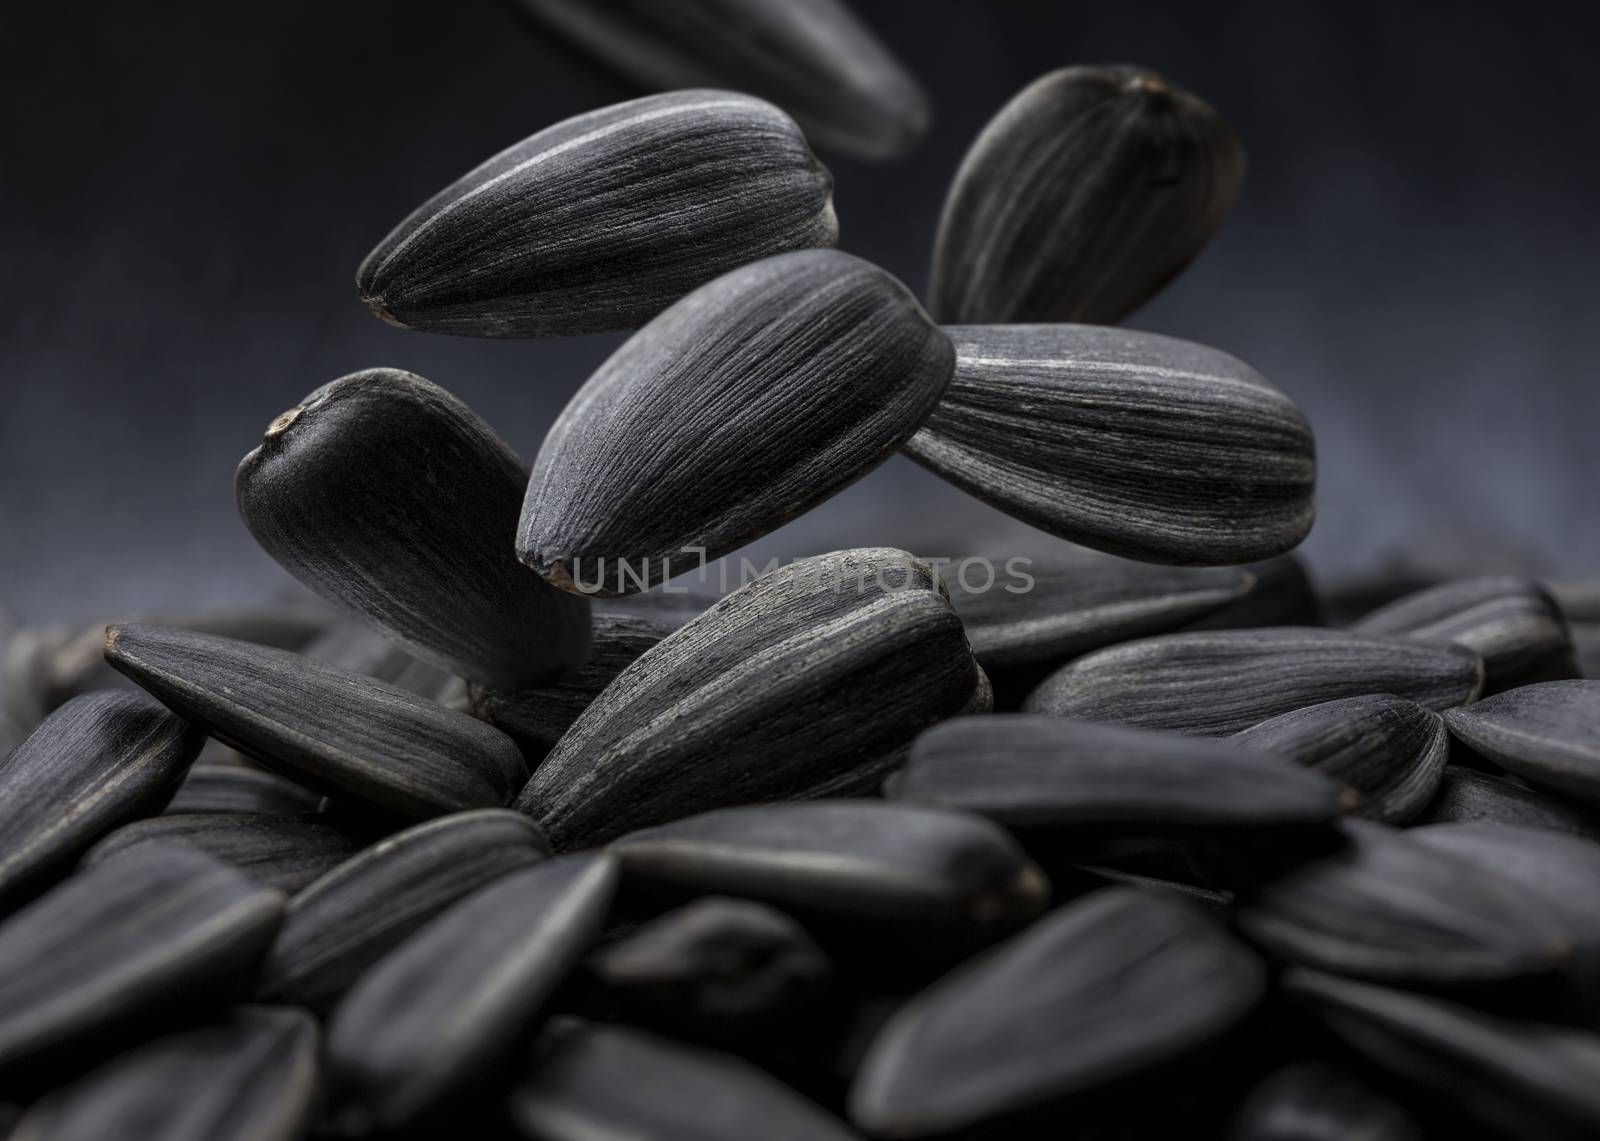 Black sunflower seeds close-up by xamtiw